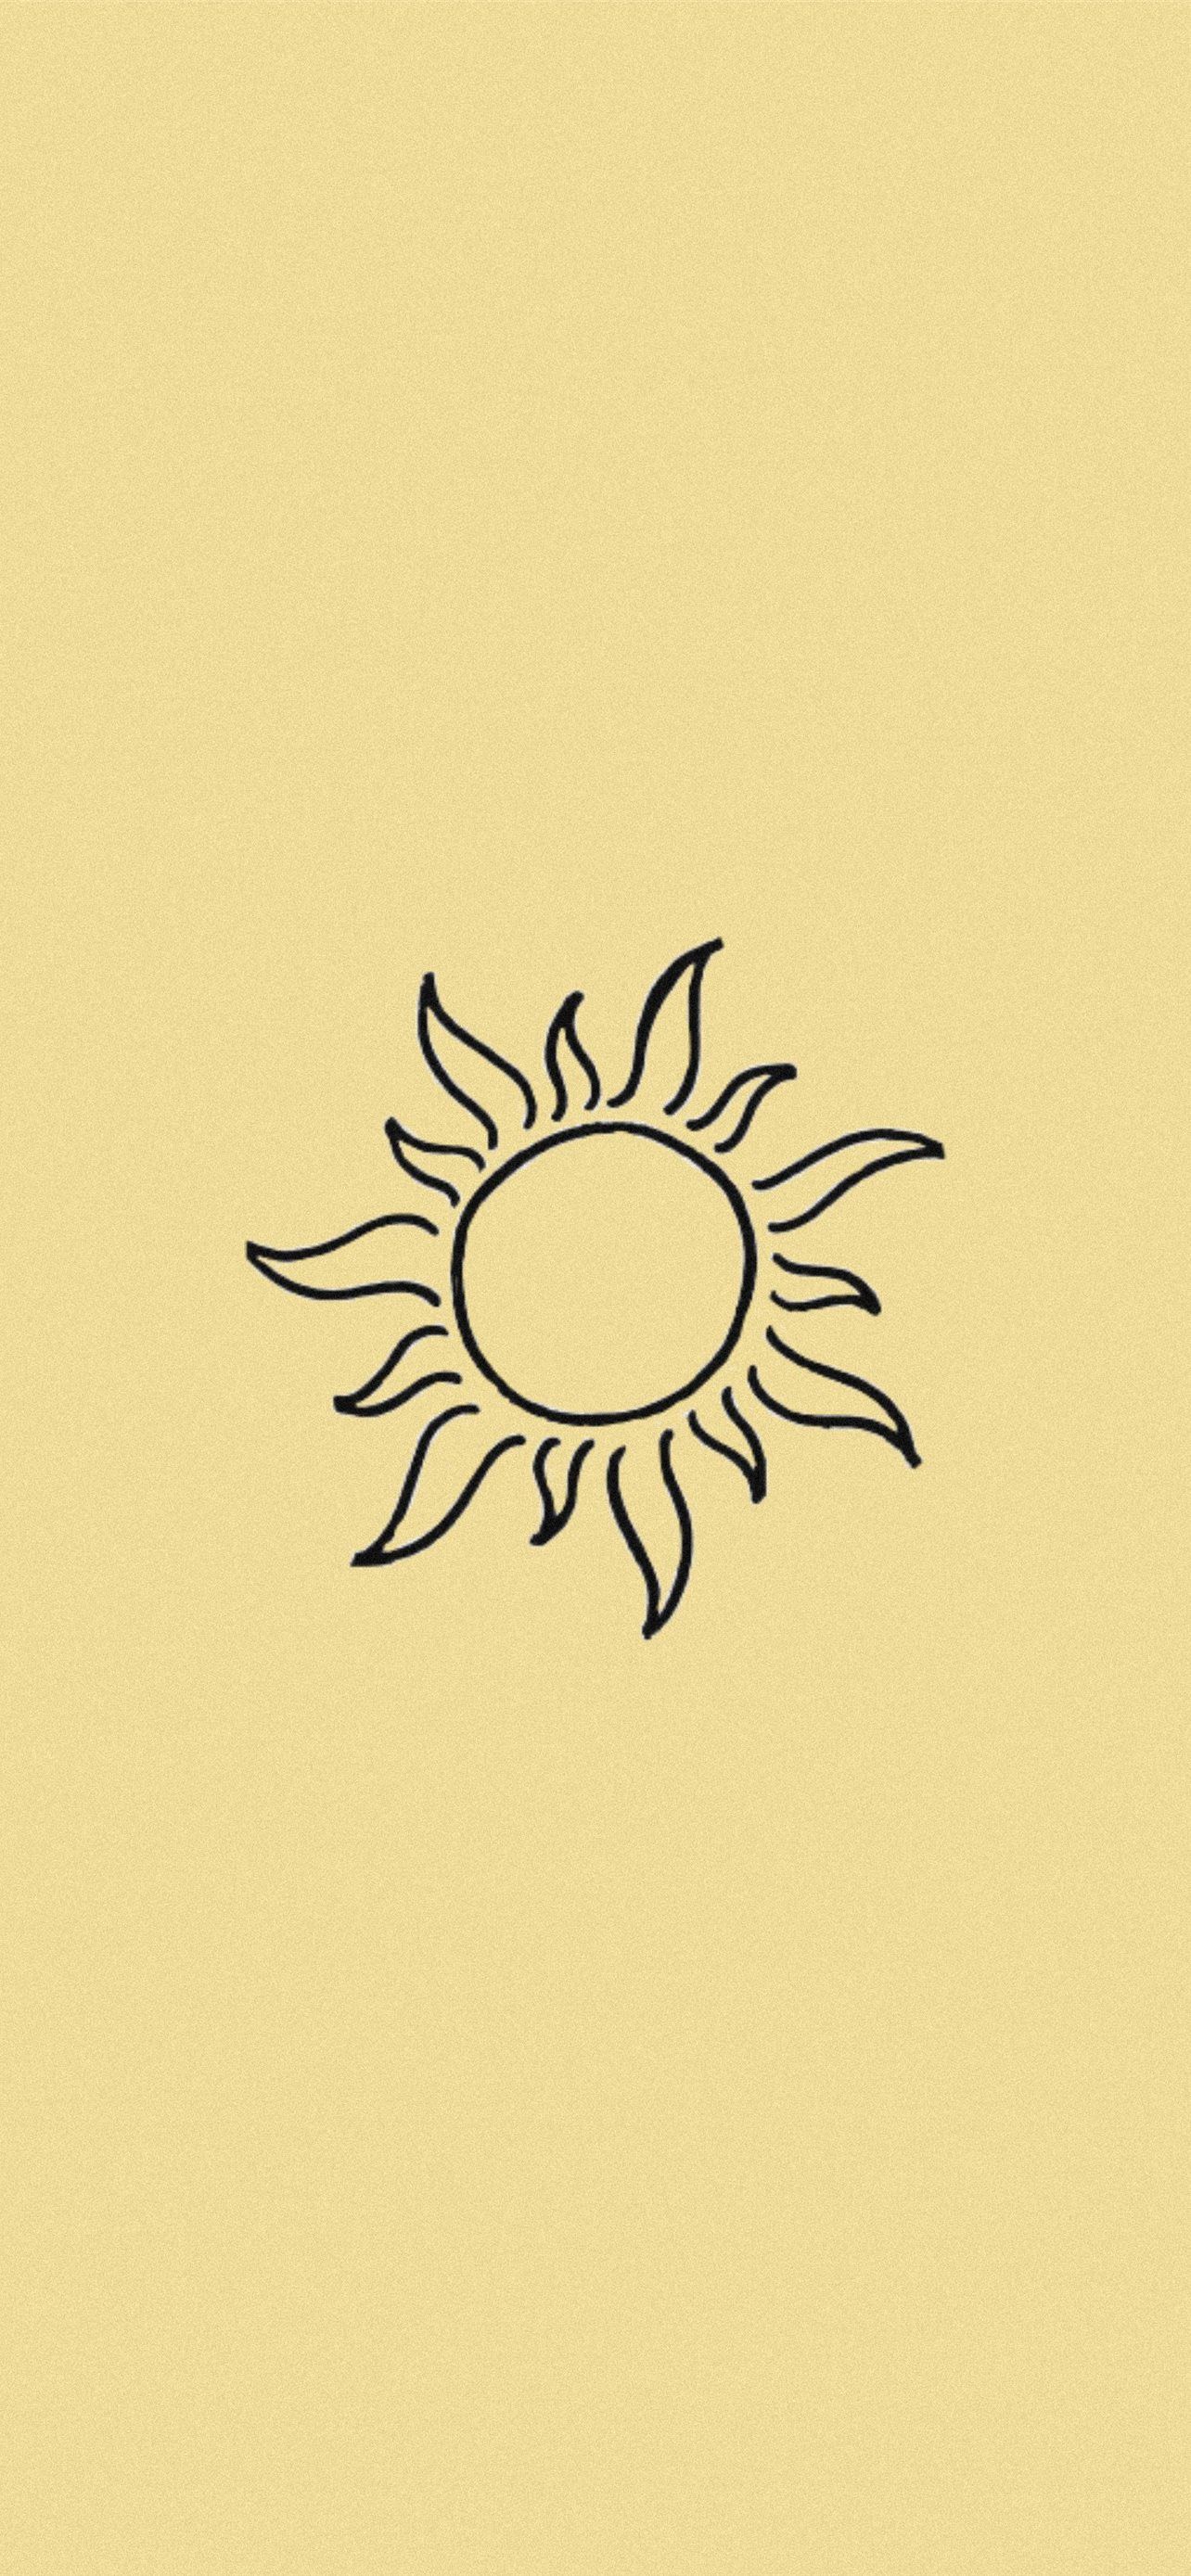 Aesthetic wallpaper drawing of a sun - Emoji